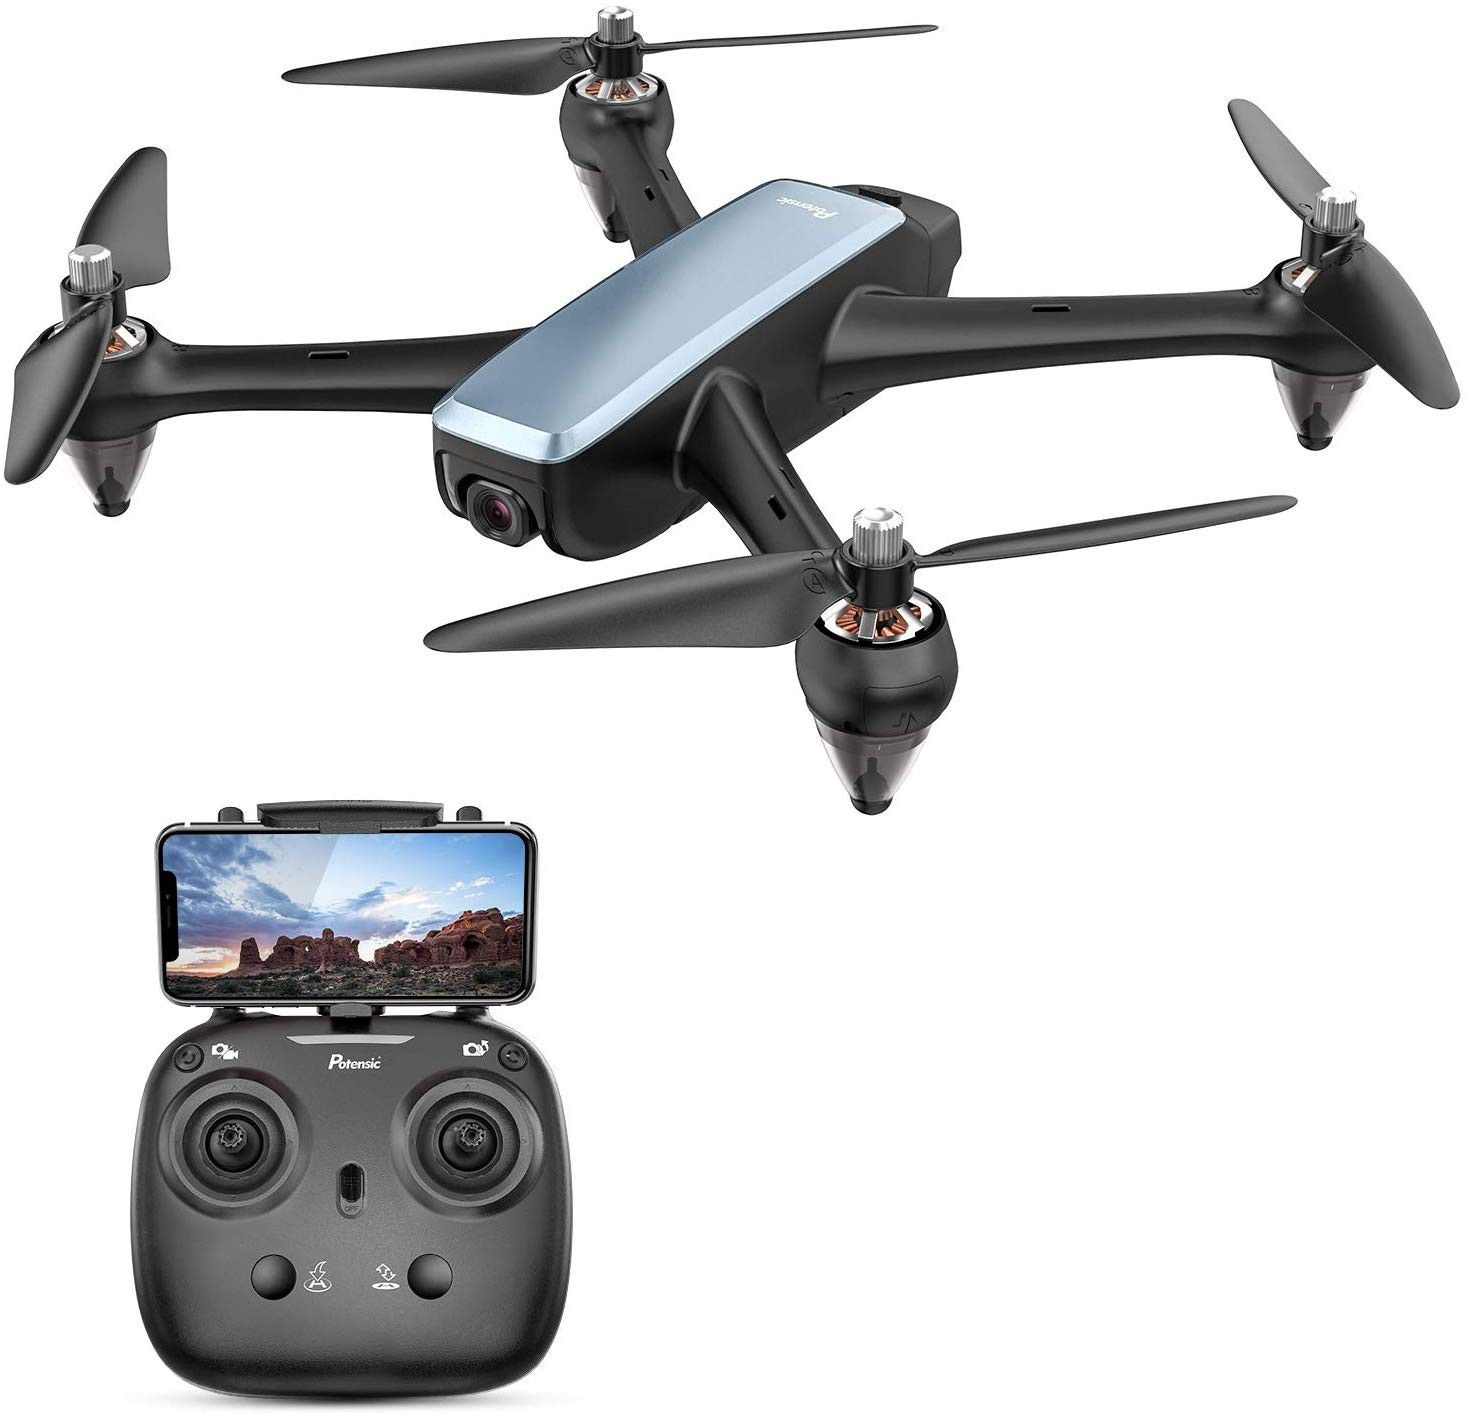 Potensic D60, GPS Drone Camera 1080P HD FPV 110° FOV Quadcopter, 5G WiFi